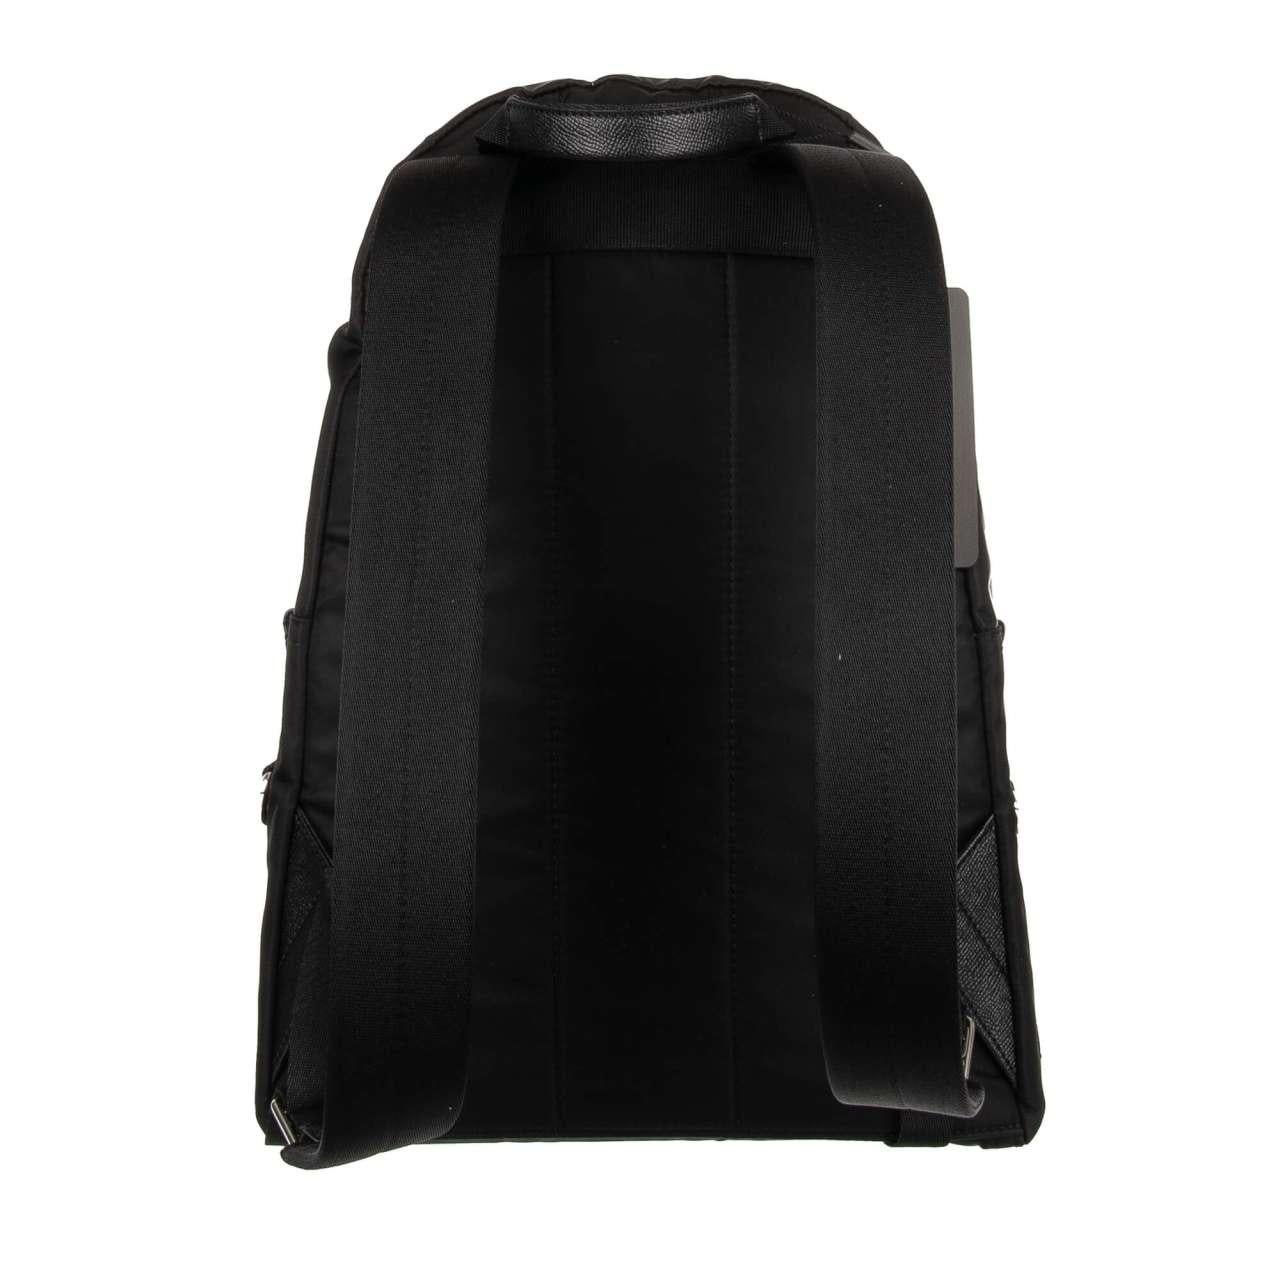 D&G Heart, Angels and Crown Embellished Backpack L'Amore e Bellezza Black-Copy For Sale 1